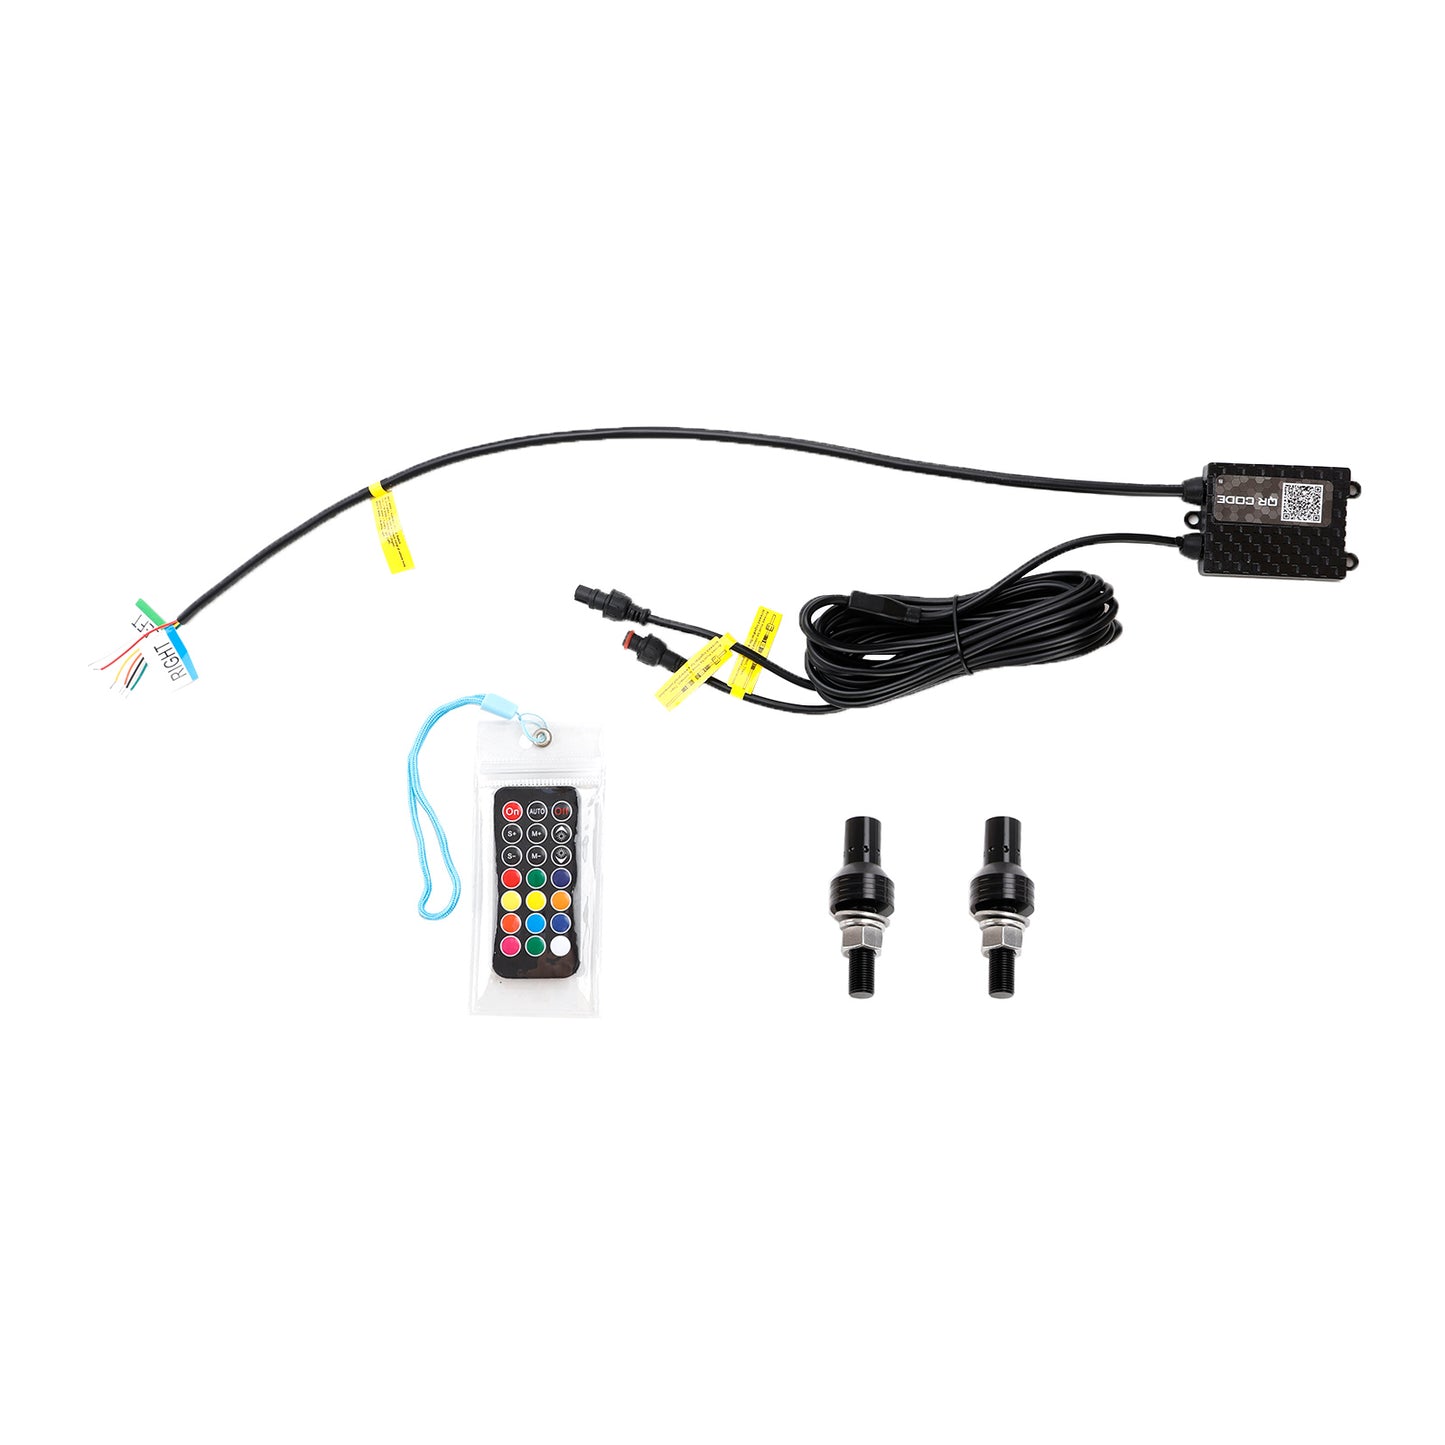 2X 3ft RGB LED Light Whip Antenna W/ Flag Remote Control For Polaris RZR UTV ATV